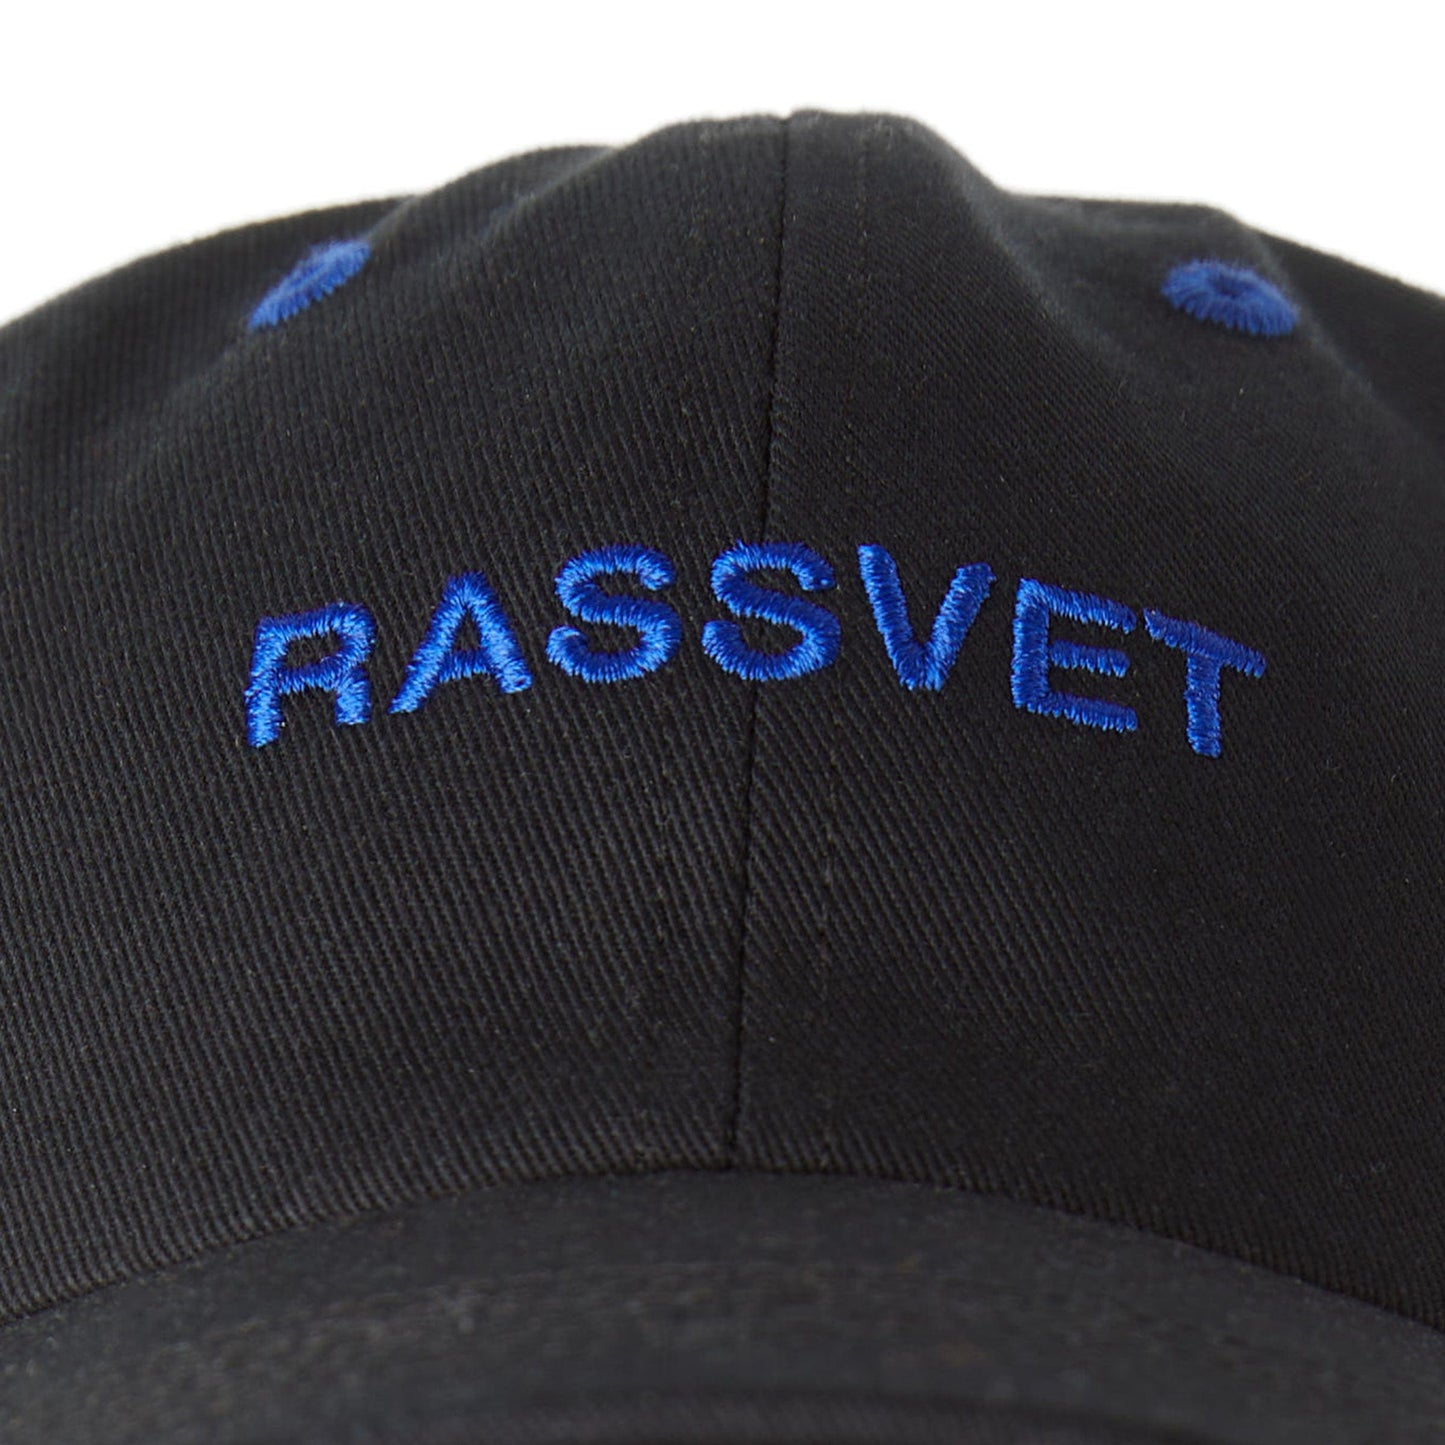 Rassvet Headwear BLACK / O/S 6 -PANEL RASSVET LOGO CAP